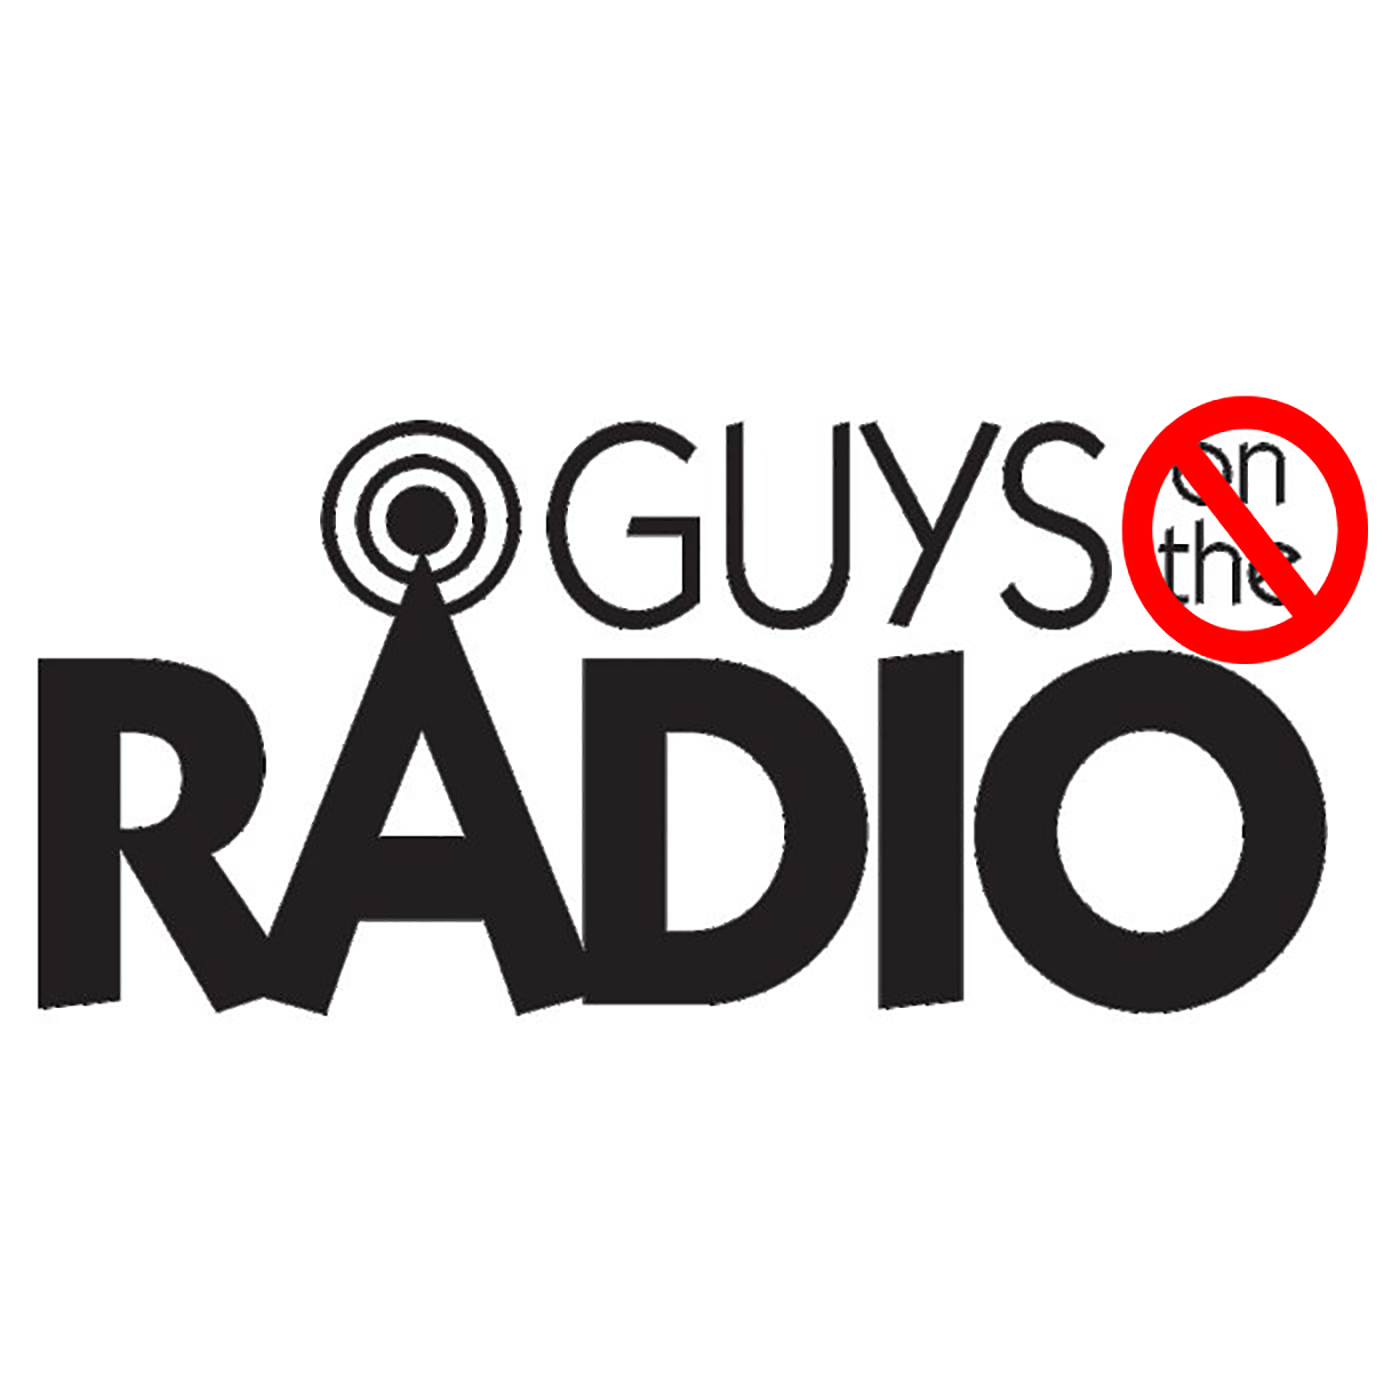 Guys NOT on the Radio